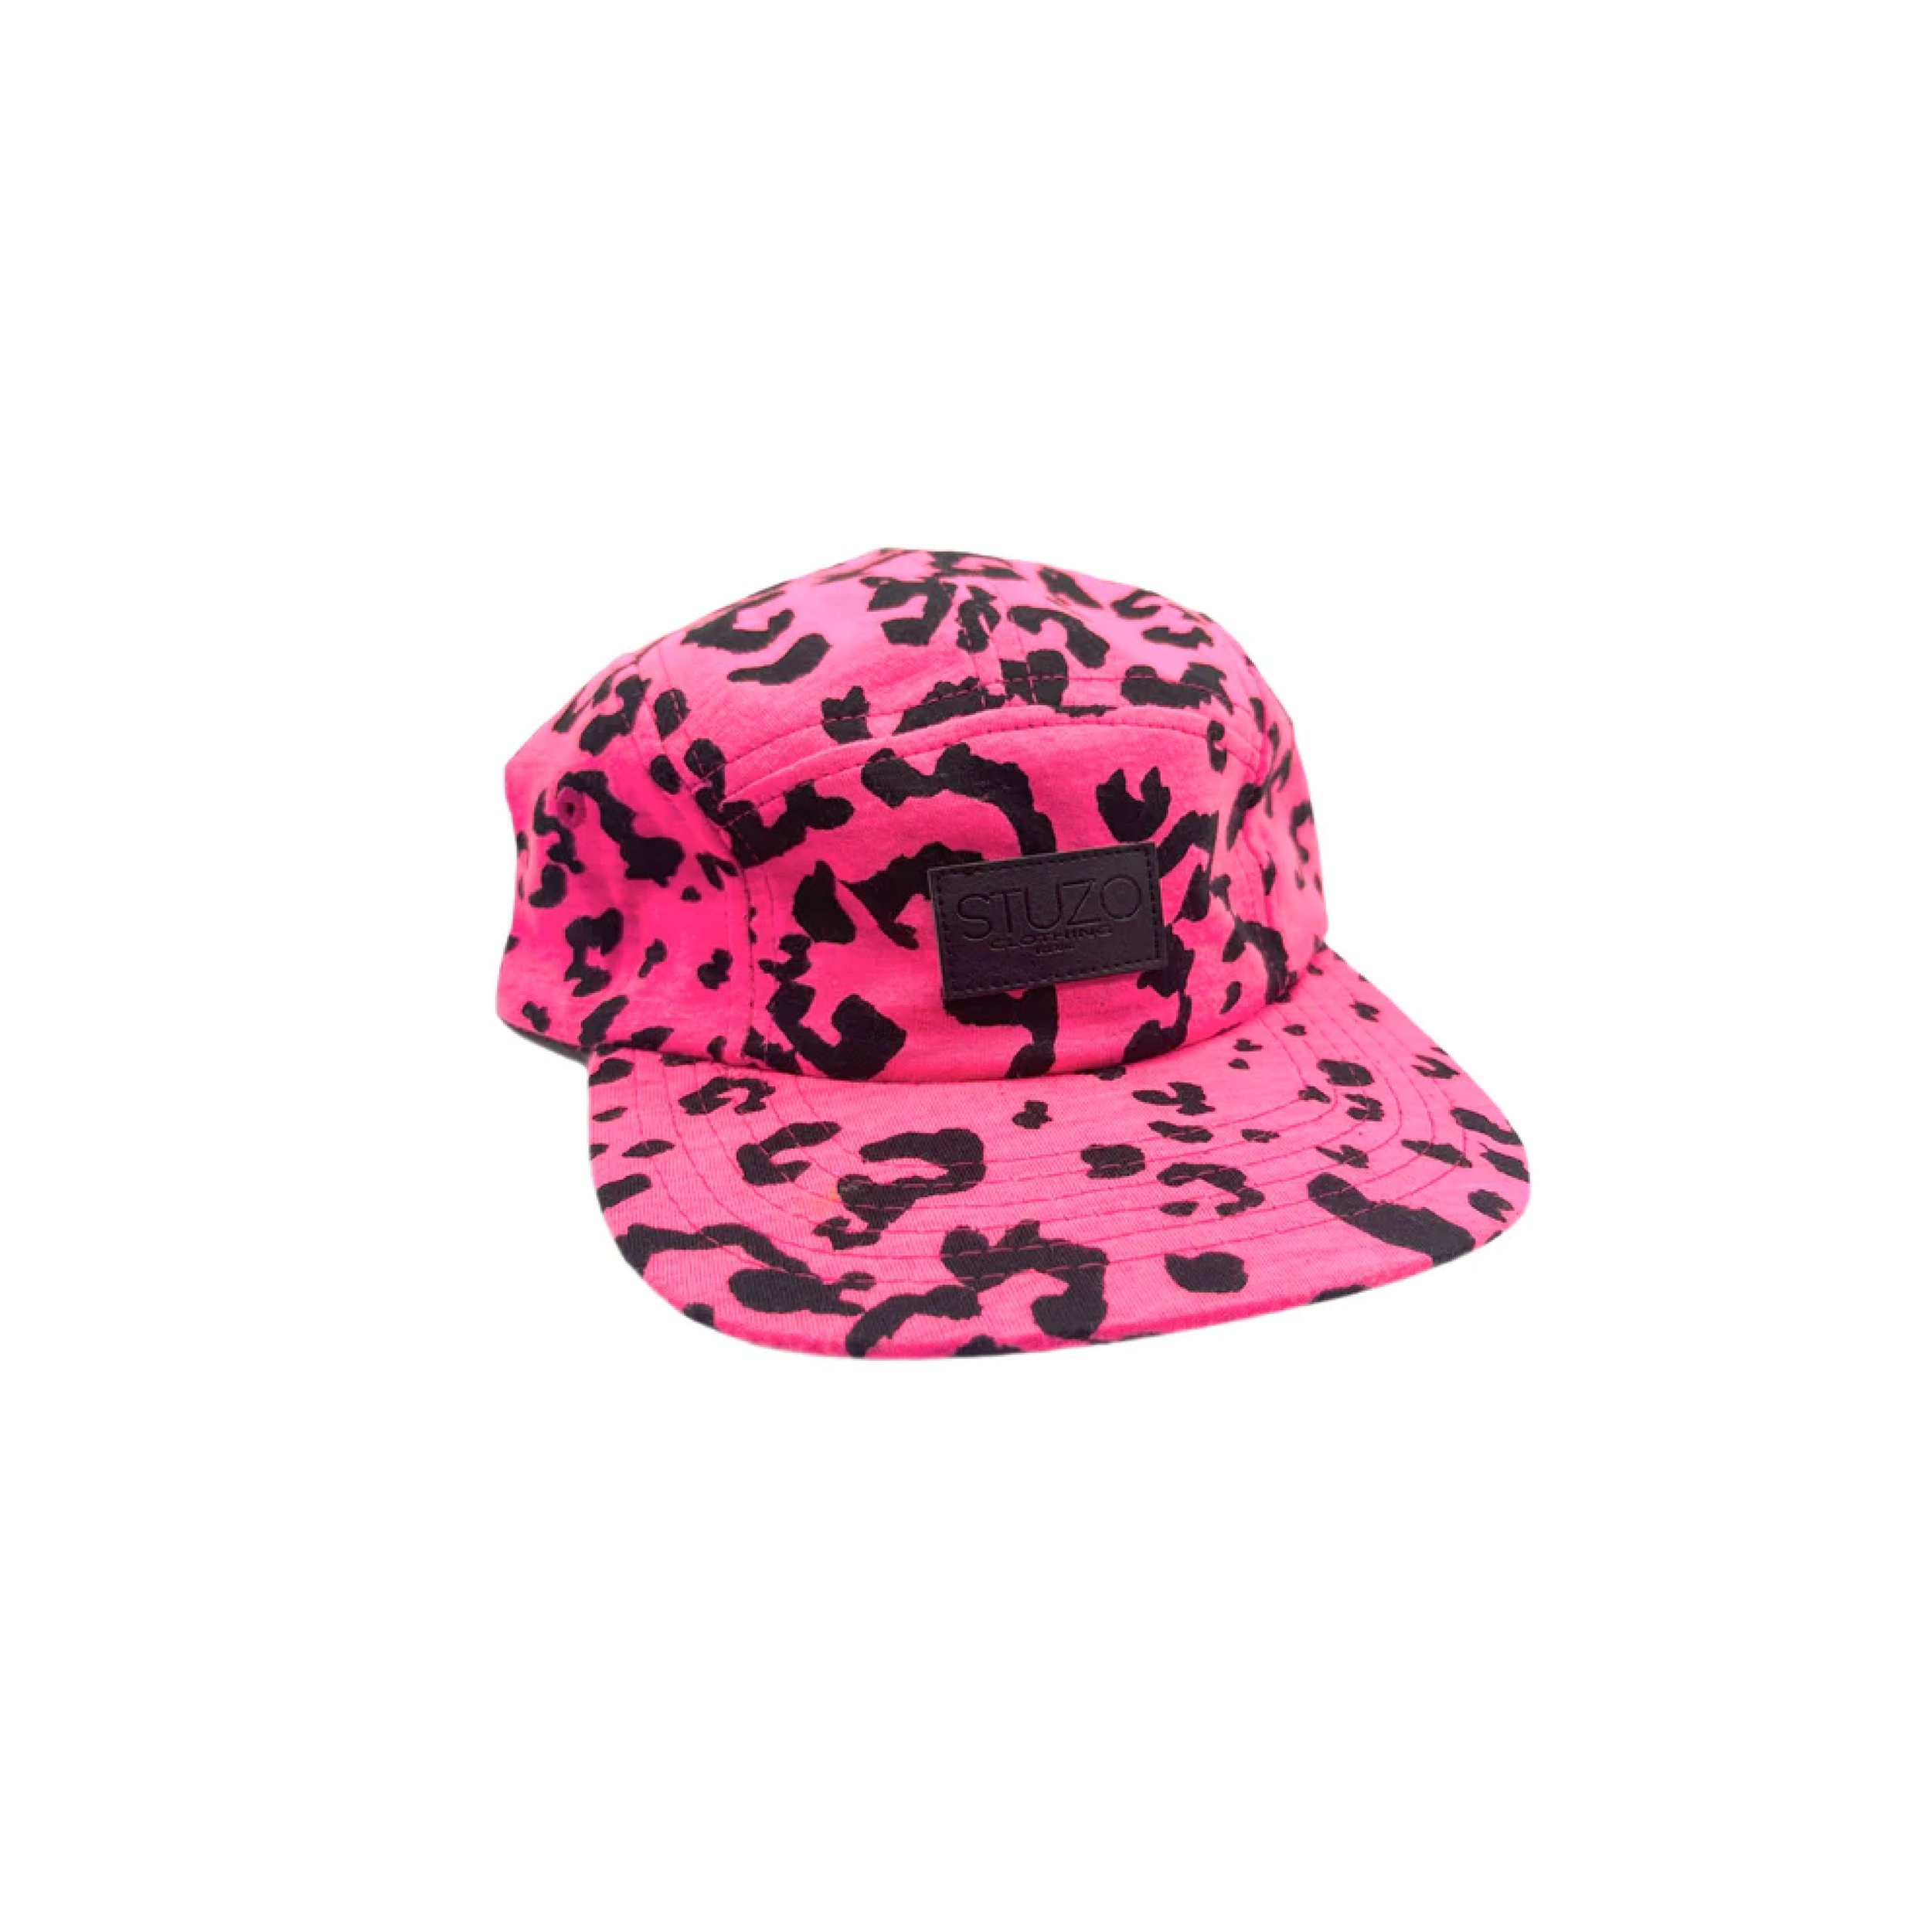 Stuzo-Pink Cheetah 5 Panel-Famm.jpg